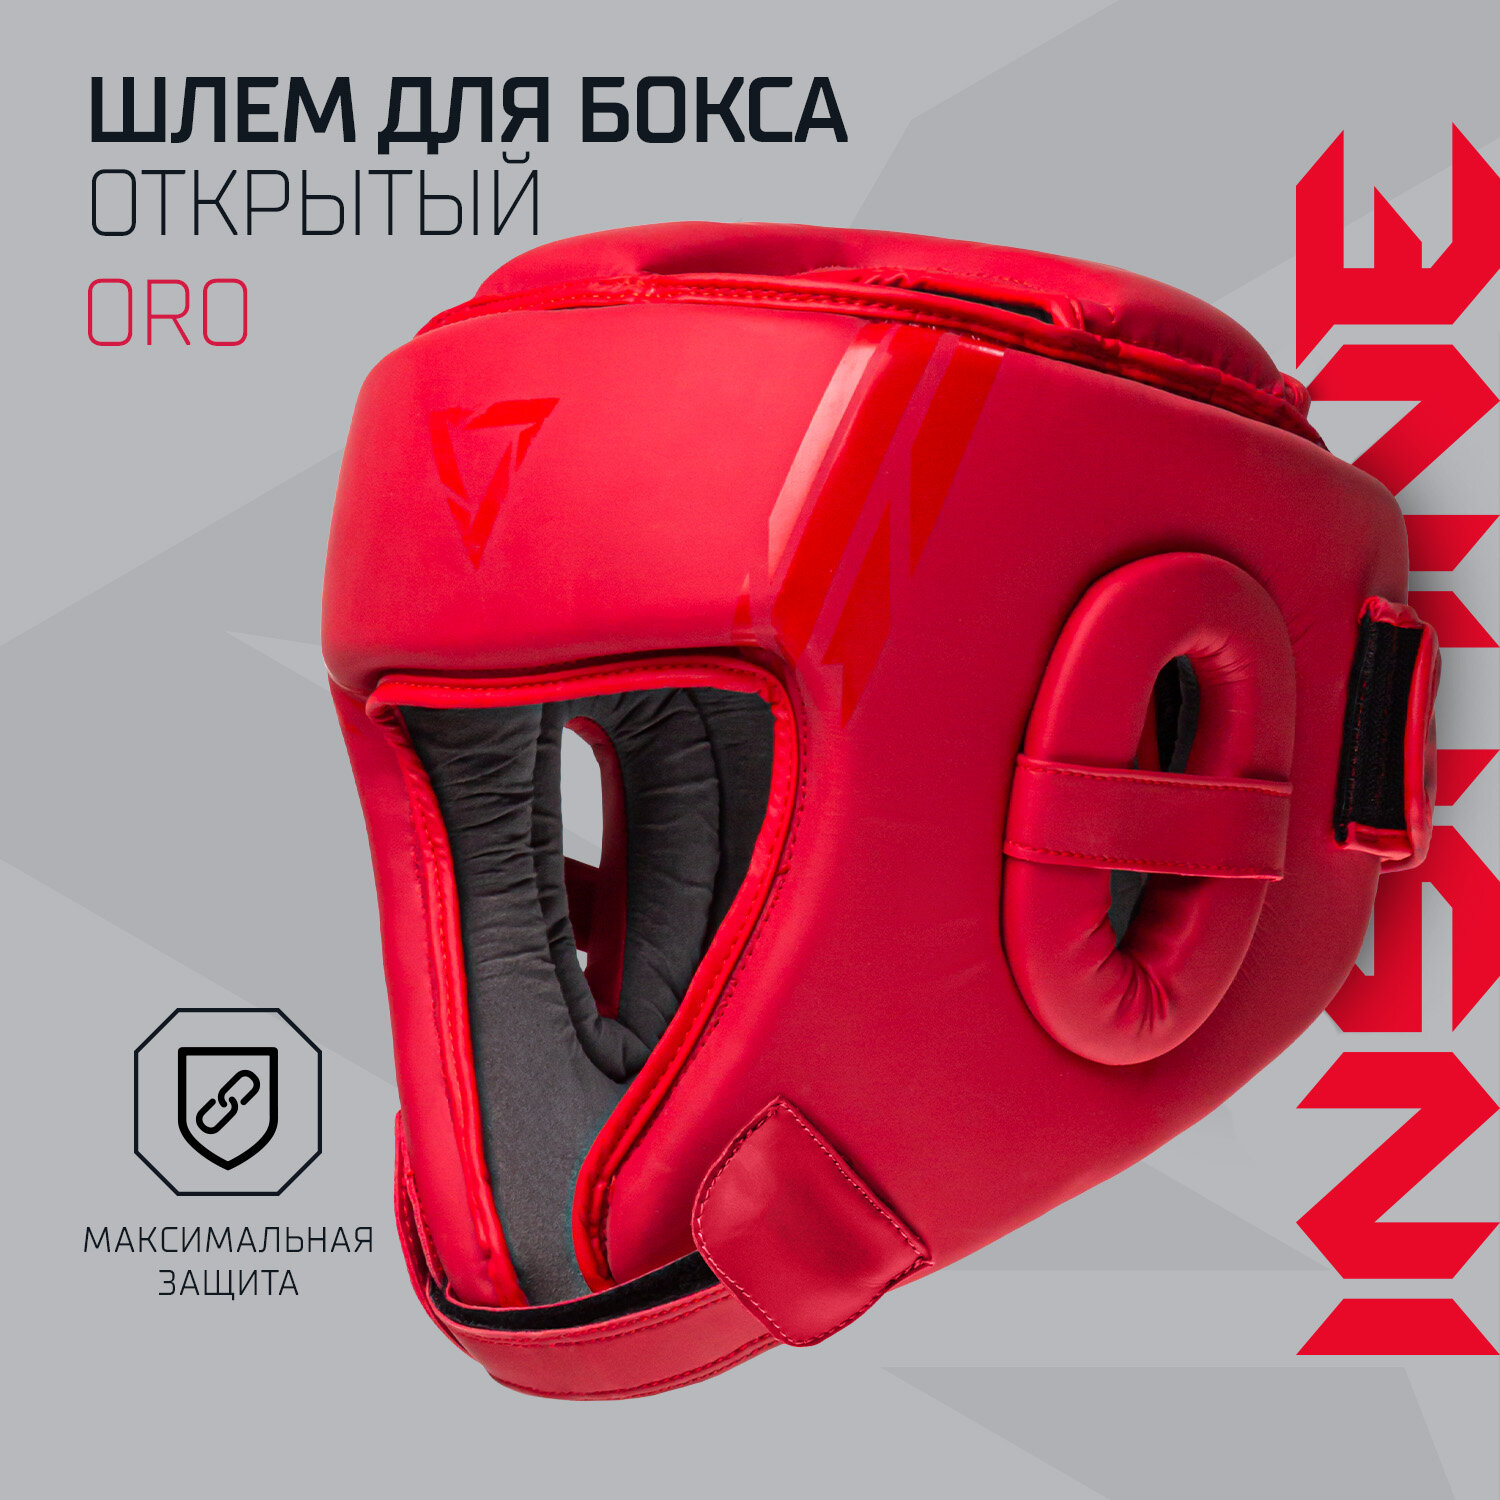 Шлем открытый INSANE ORO IN23-HG300, ПУ, красный, размер M